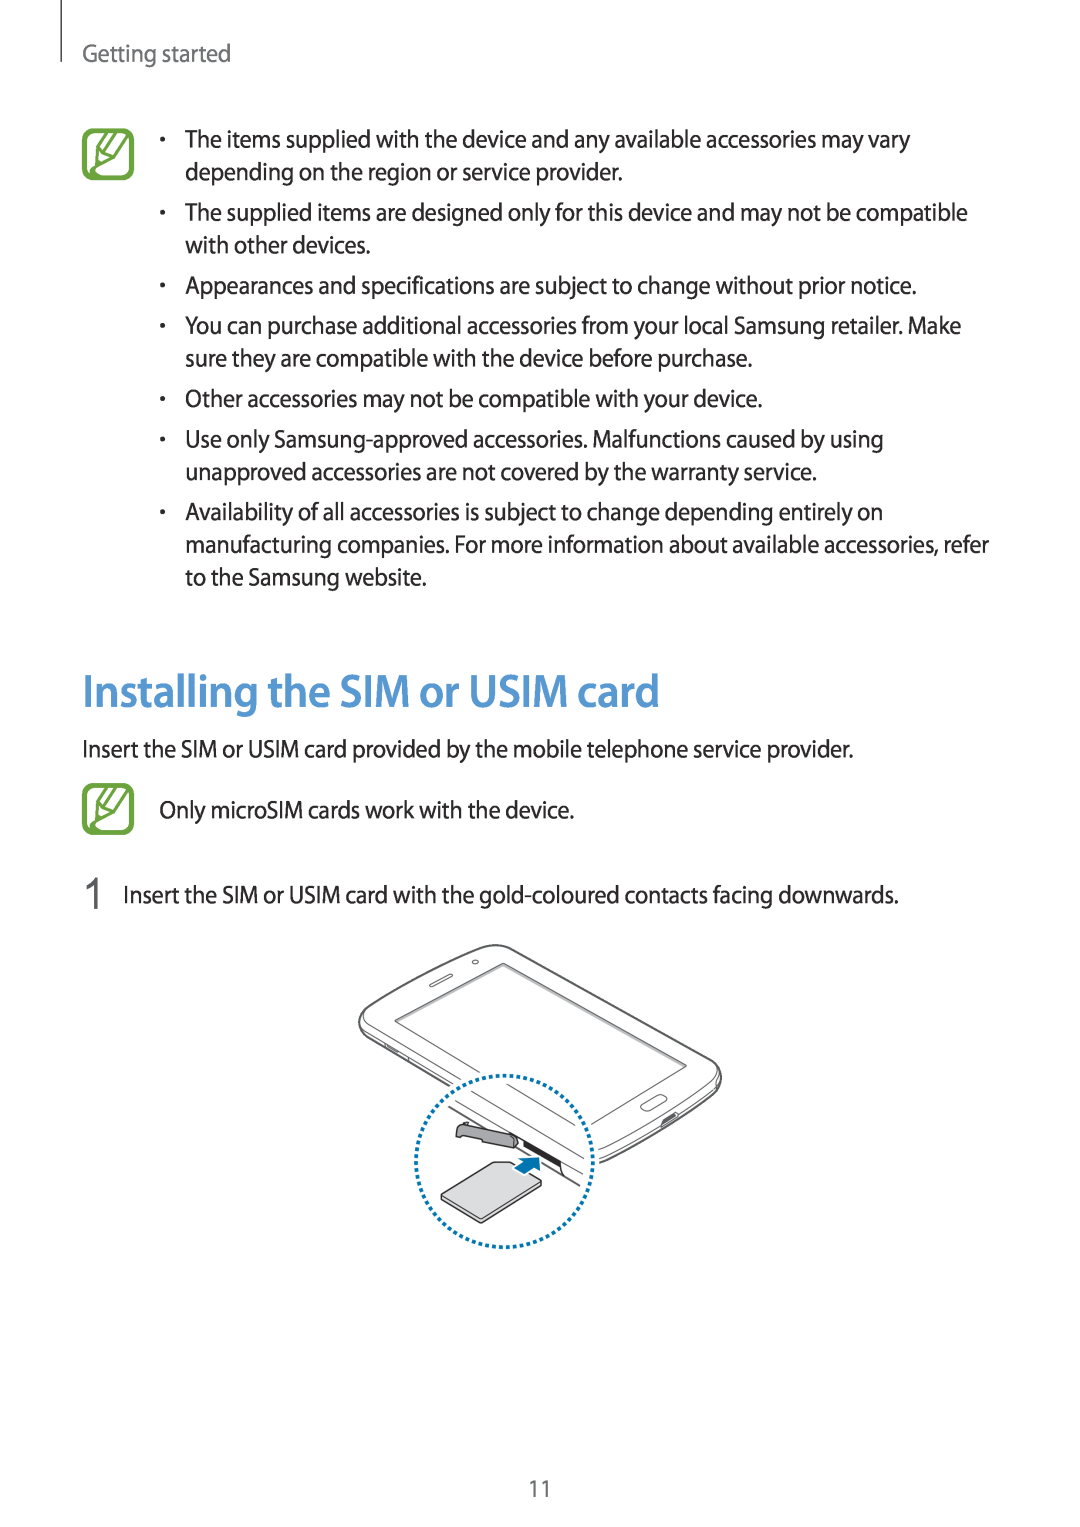 Samsung GT-N5100 user manual Installing the SIM or USIM card, Getting started 